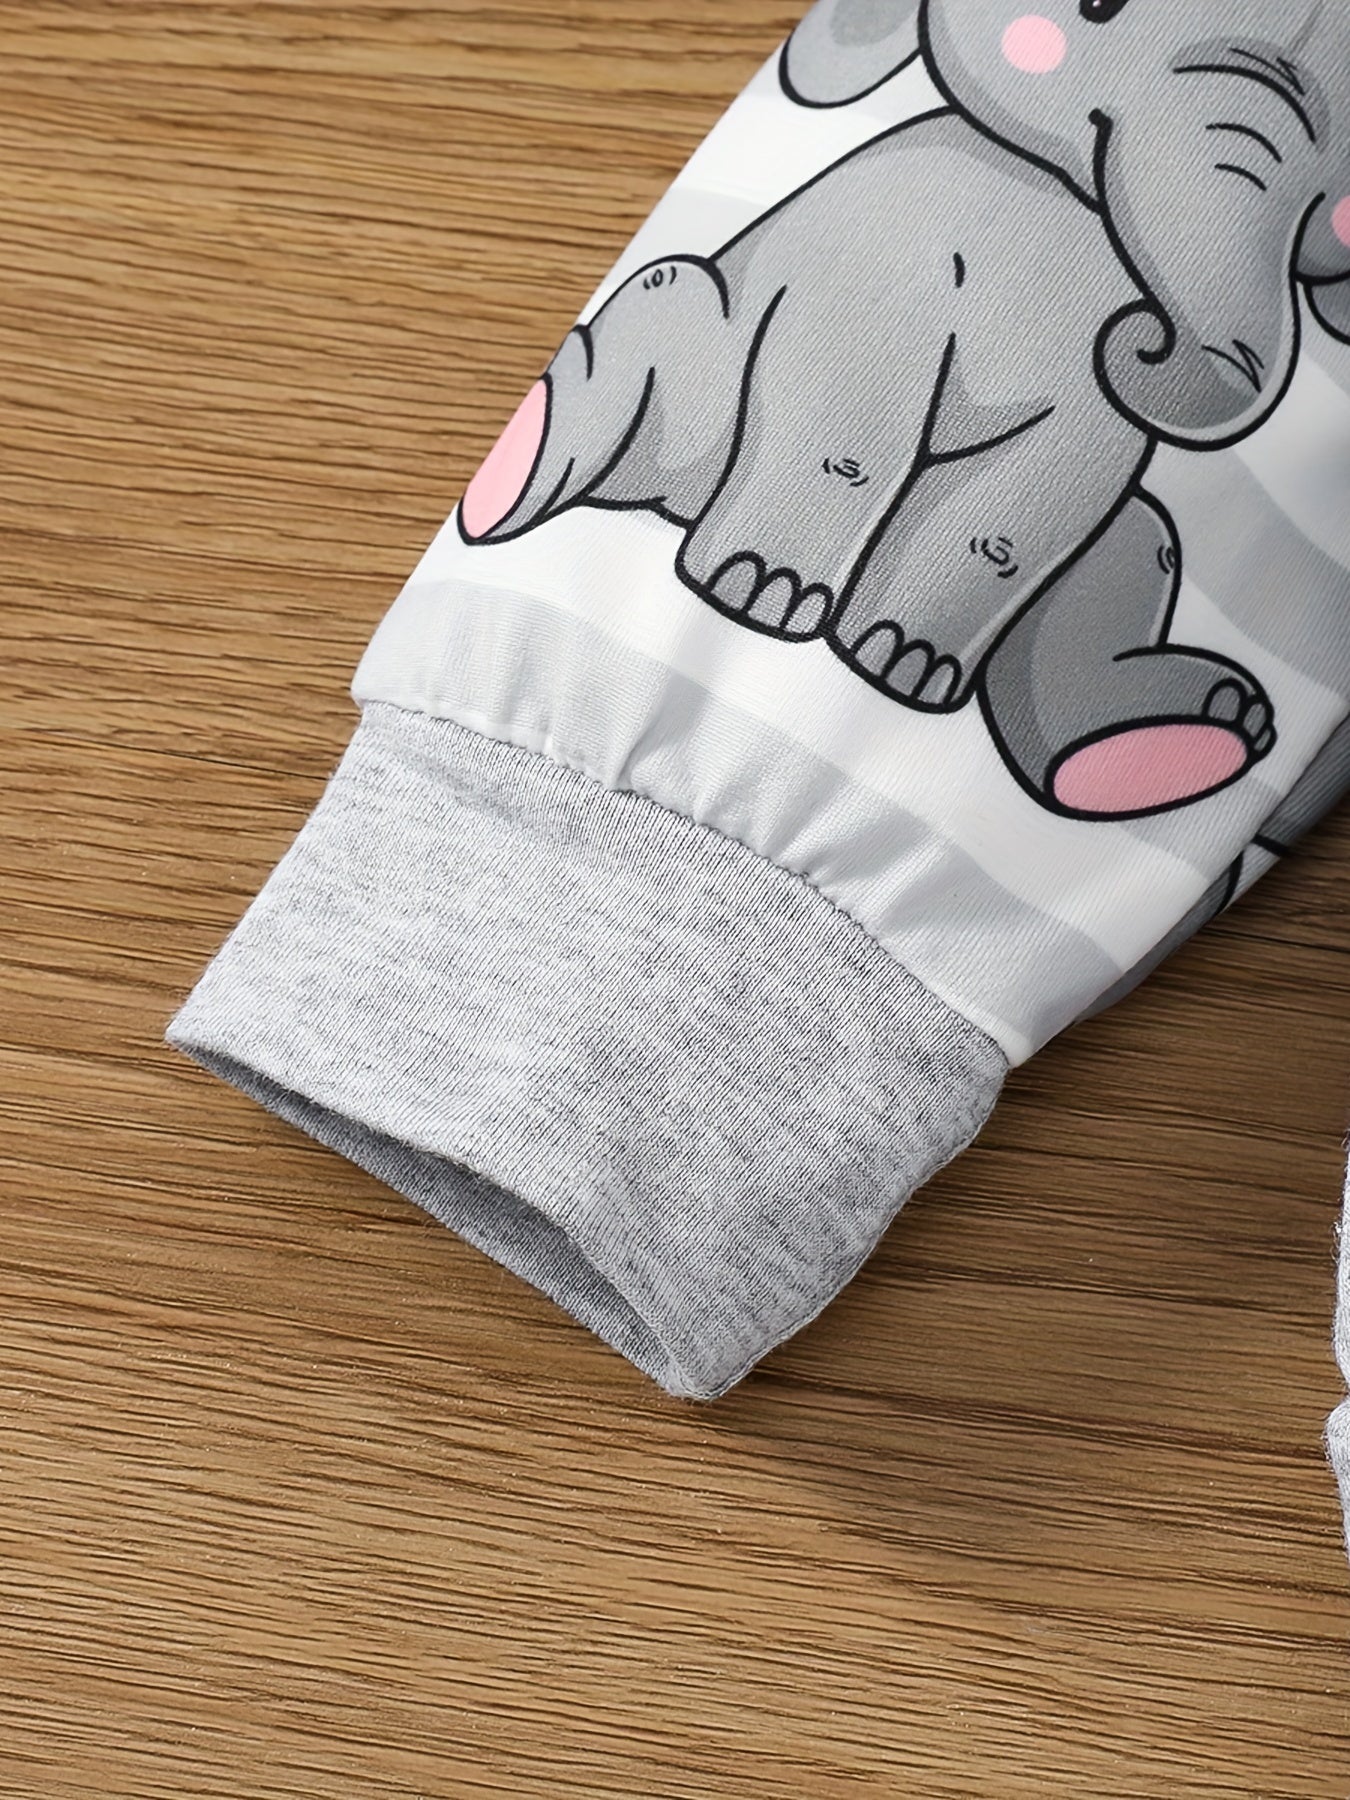 Baby Boy's Cute Elephant Cartoon Print Comfortable Long-sleeved Hooded Top + Pants Set